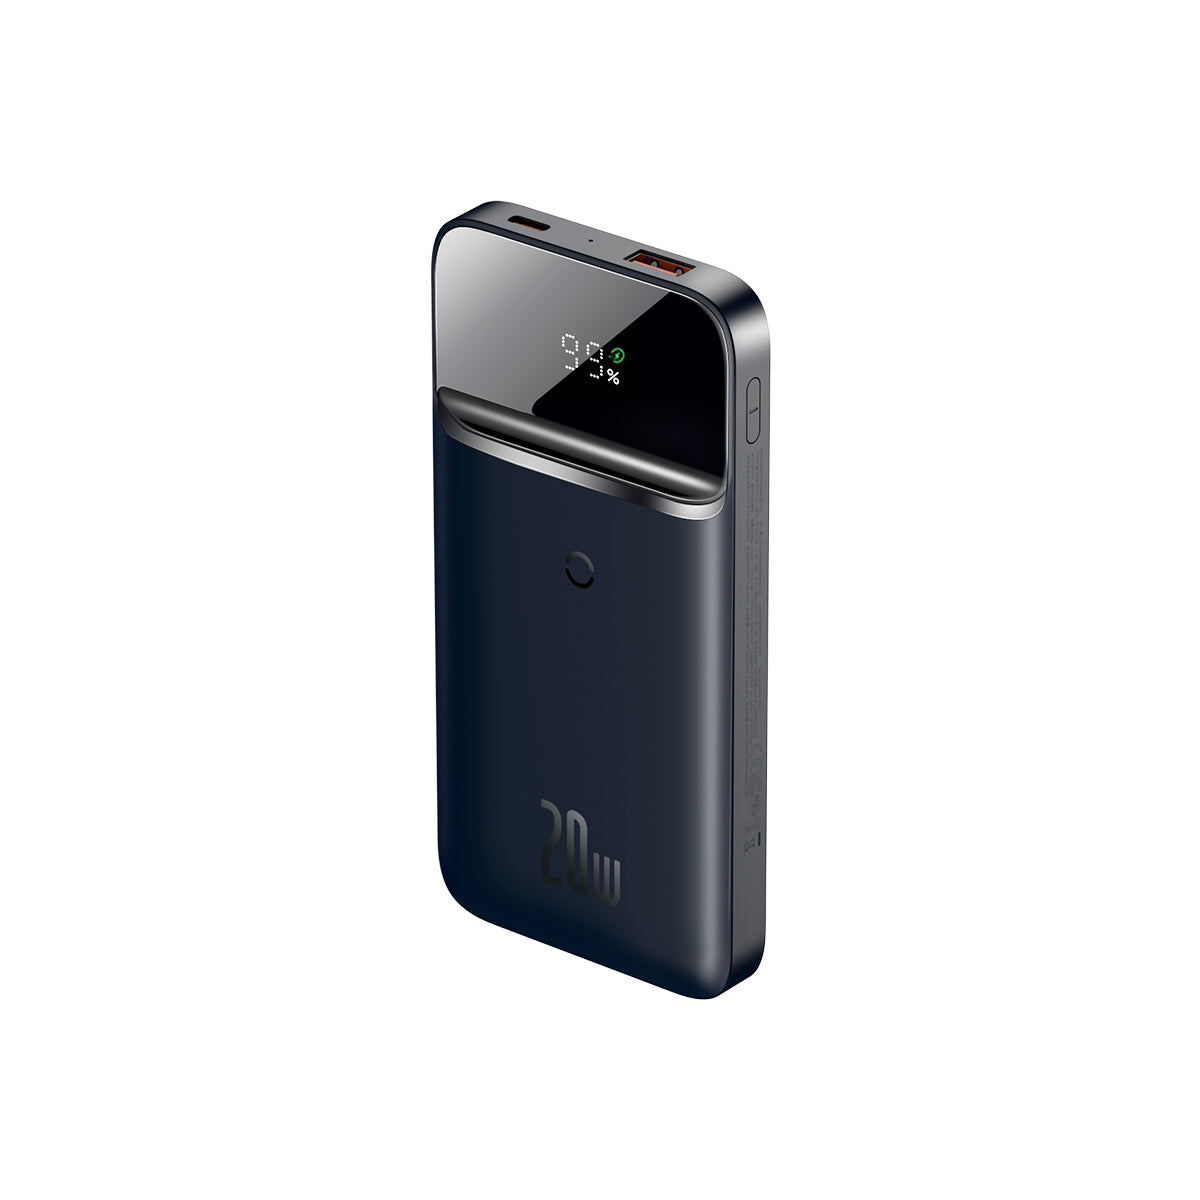 Batería Magsafe Magnético IPHONE SAMSUNG Android Verde 5,000 mA